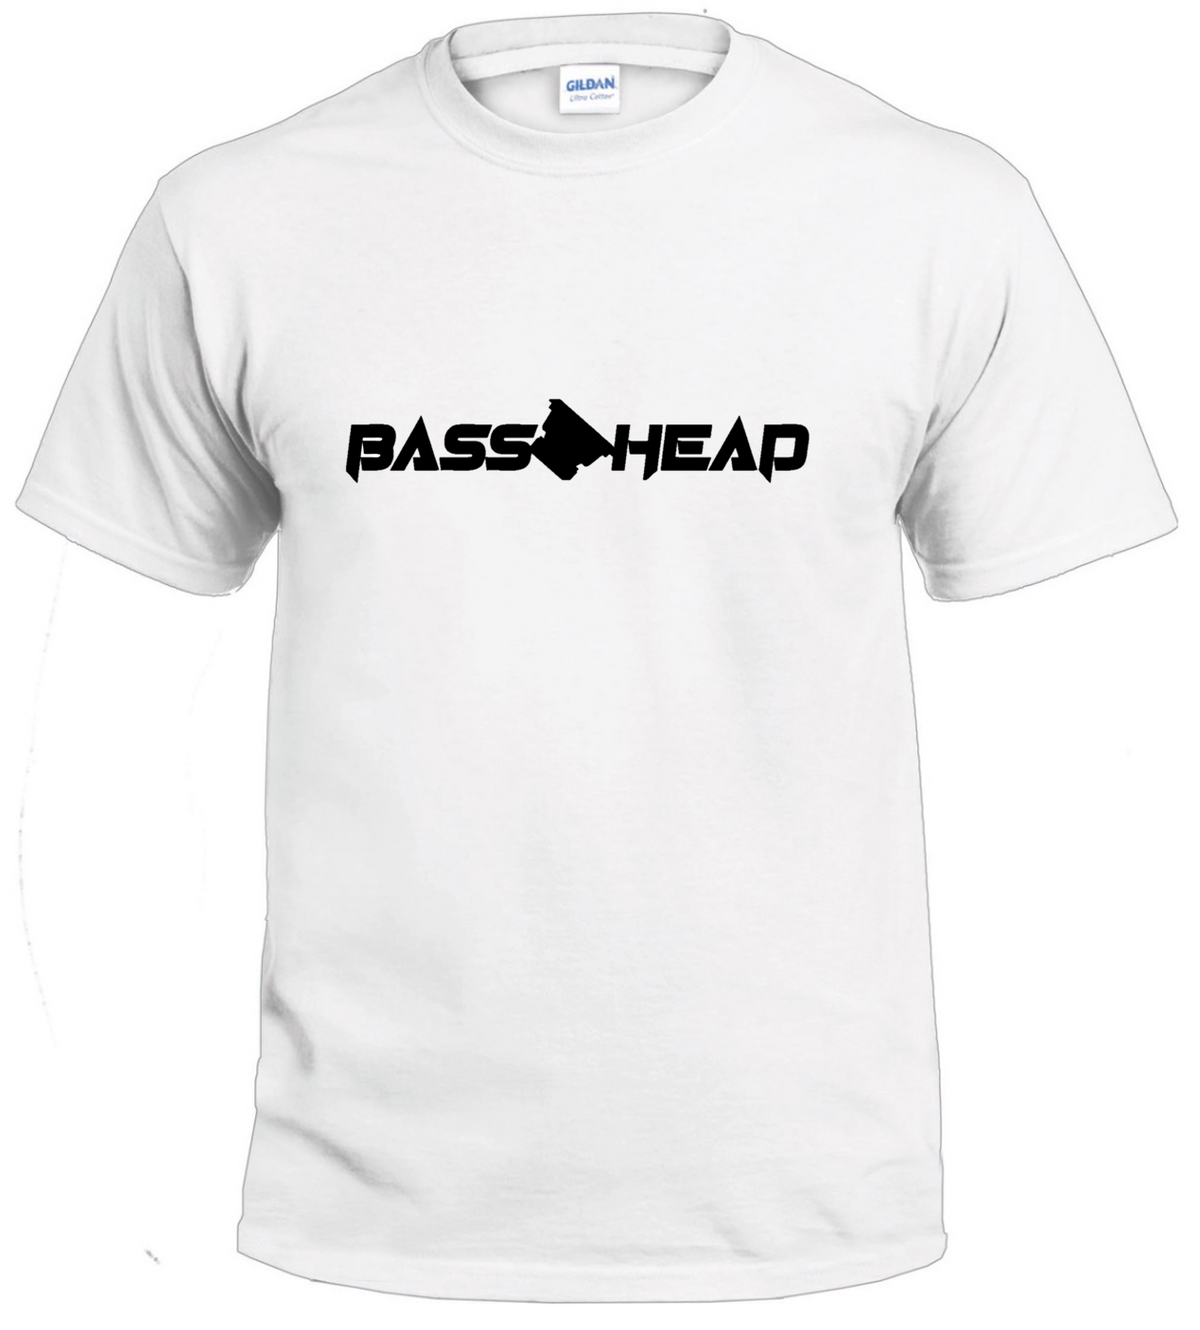 Bass Head with Sub Basshead tshirt